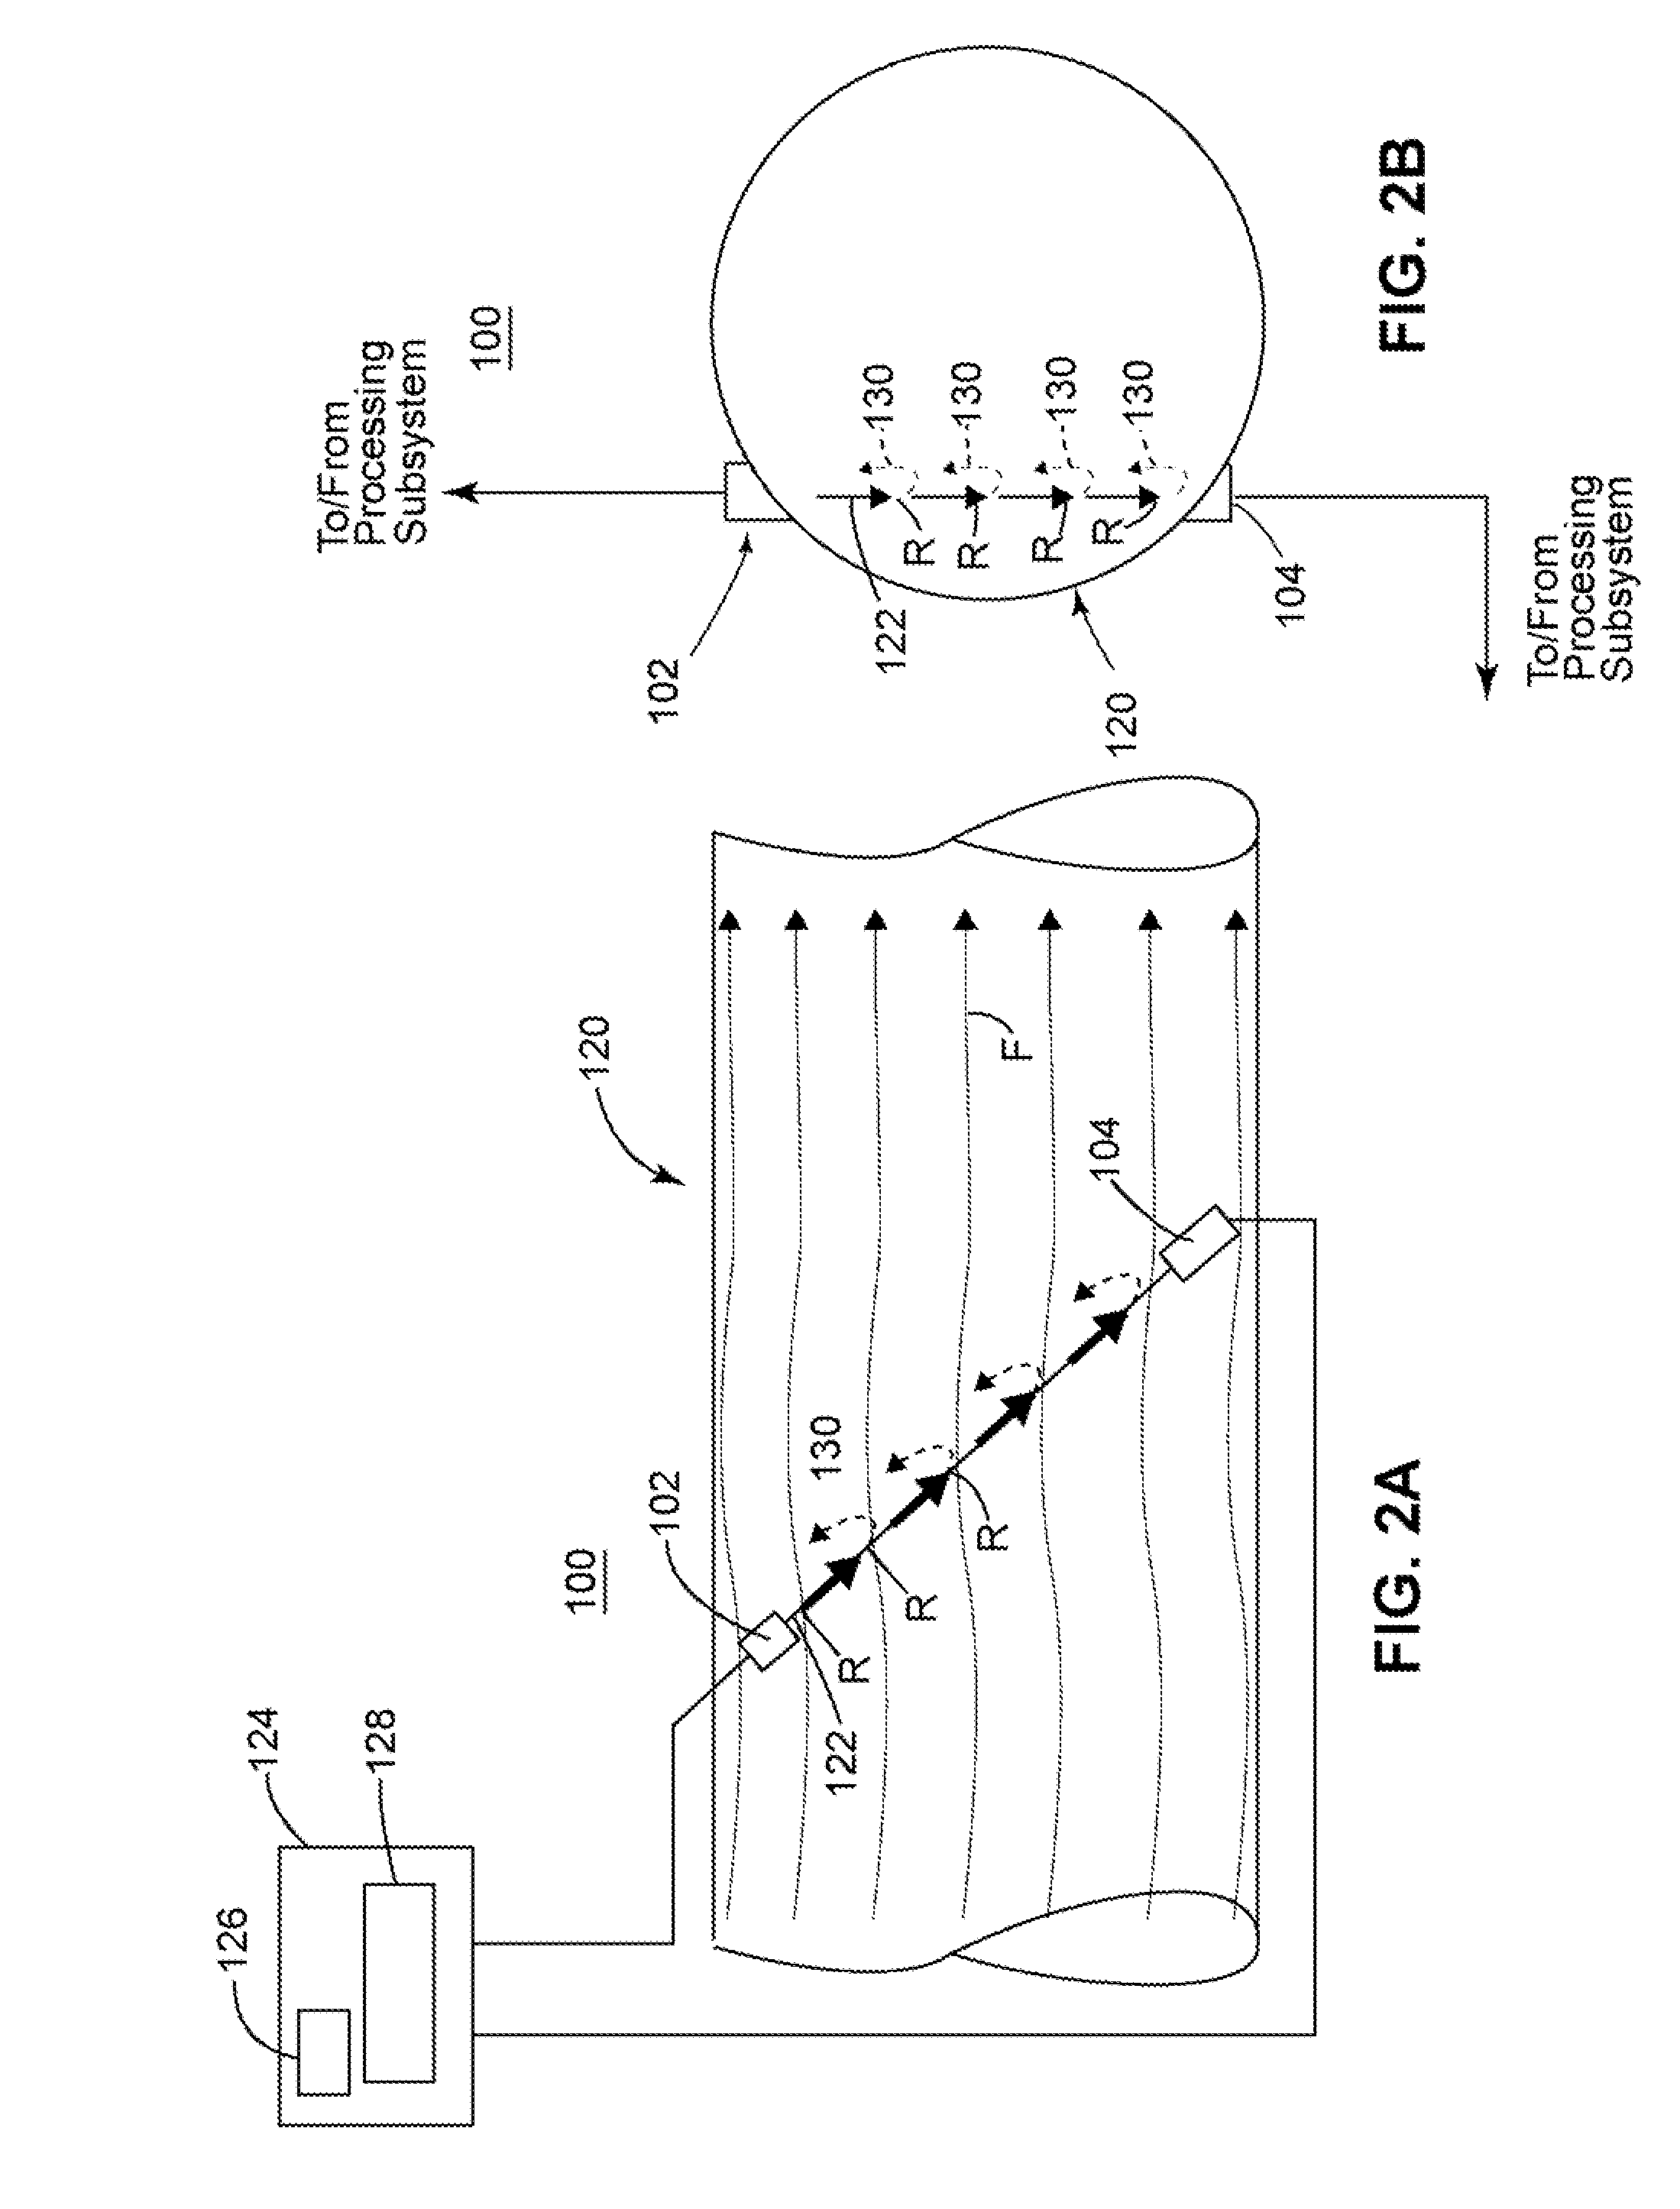 Ultrasonic flow meter system